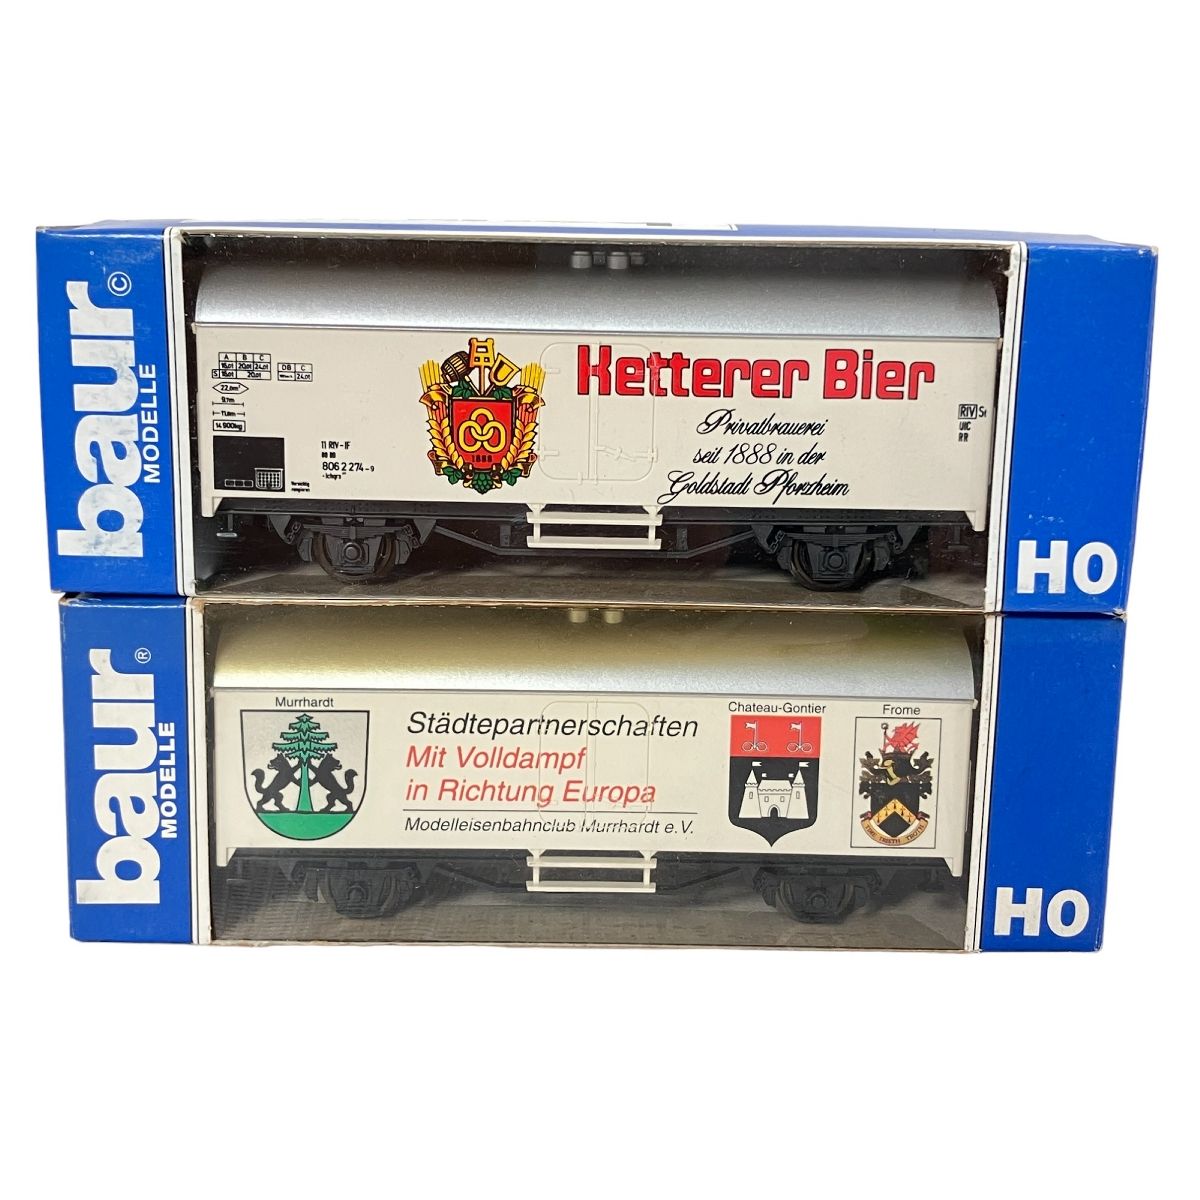 baur Modelleisenbahnclub Murrhardt e.V Ketterer Bier 貨車 2両 セット HOゲージ 鉄道模型  W8978318